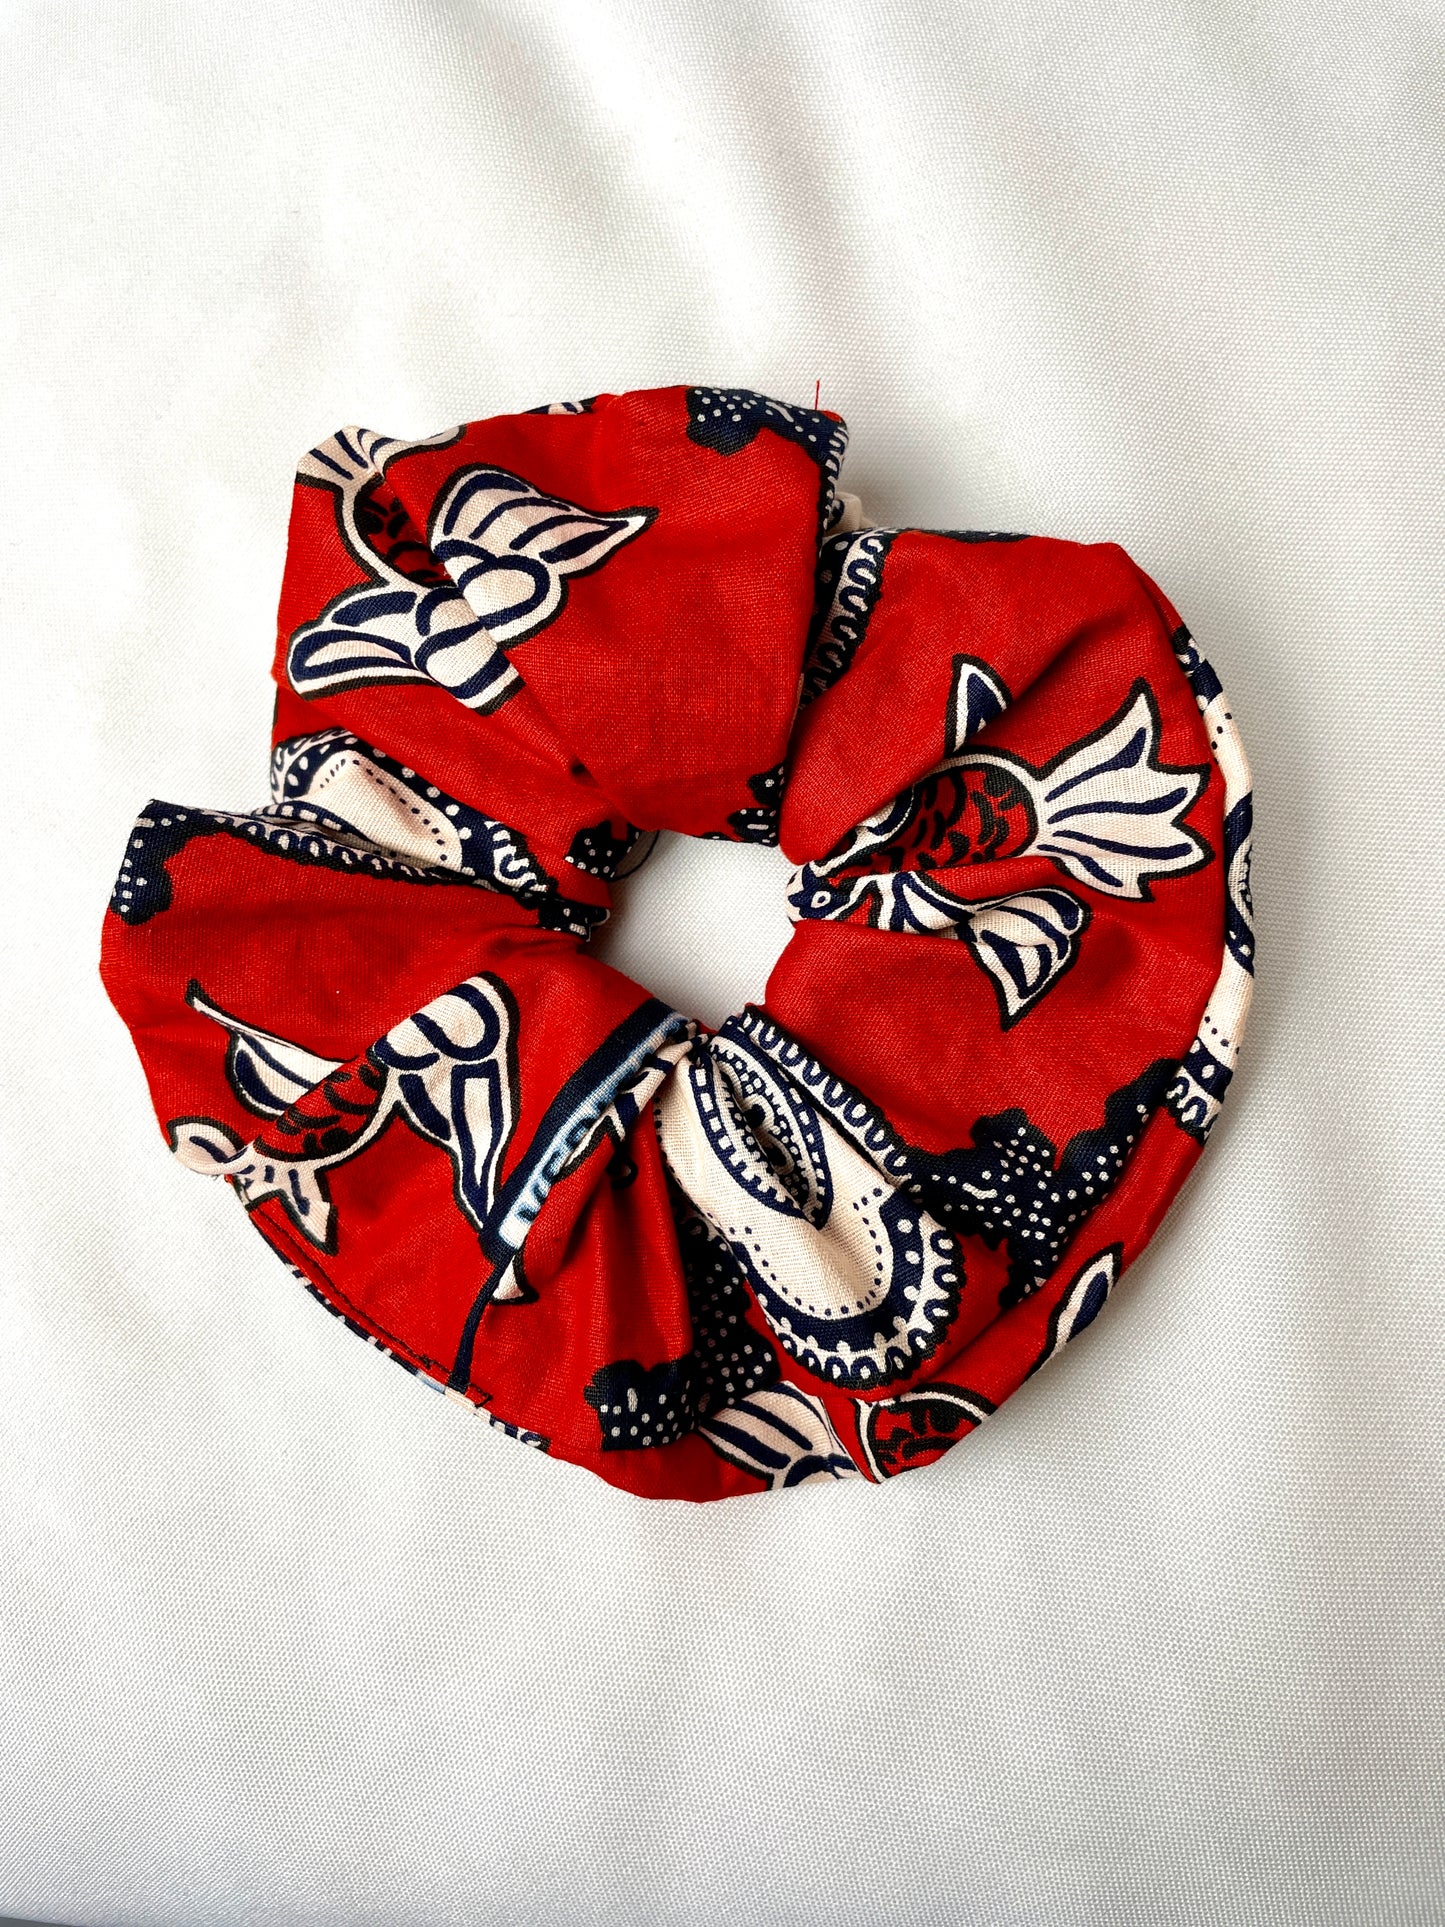 AFRICAN Print Scrunchies - Hair Accessories - Medium Red and Peach